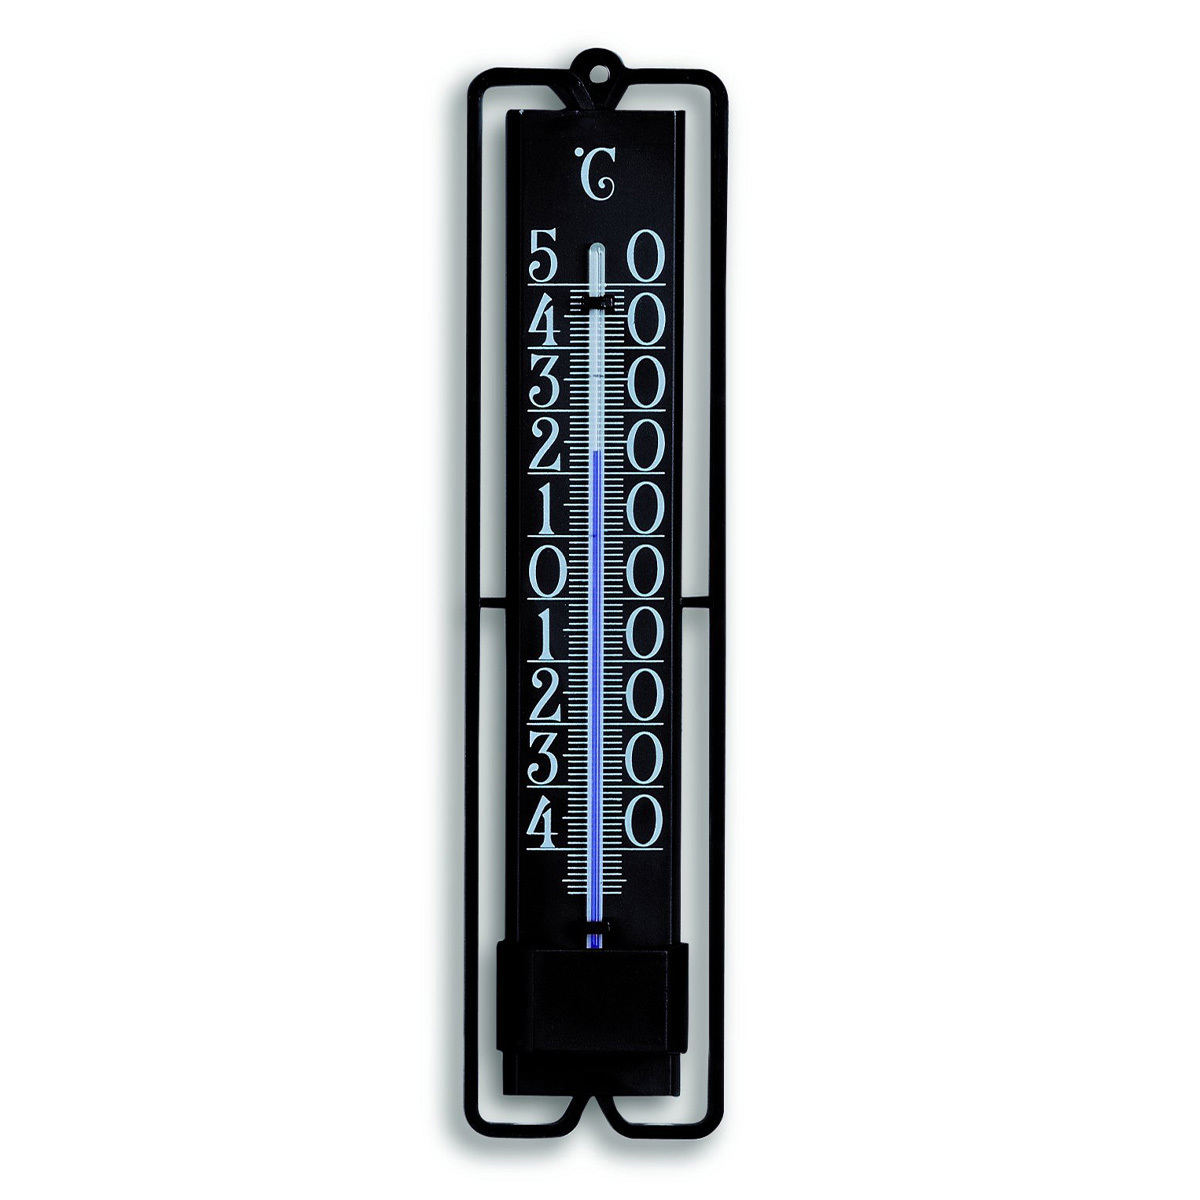 12-3000-01-analoges-innen-aussen-thermometer-novelli-design-1200x1200px.jpg